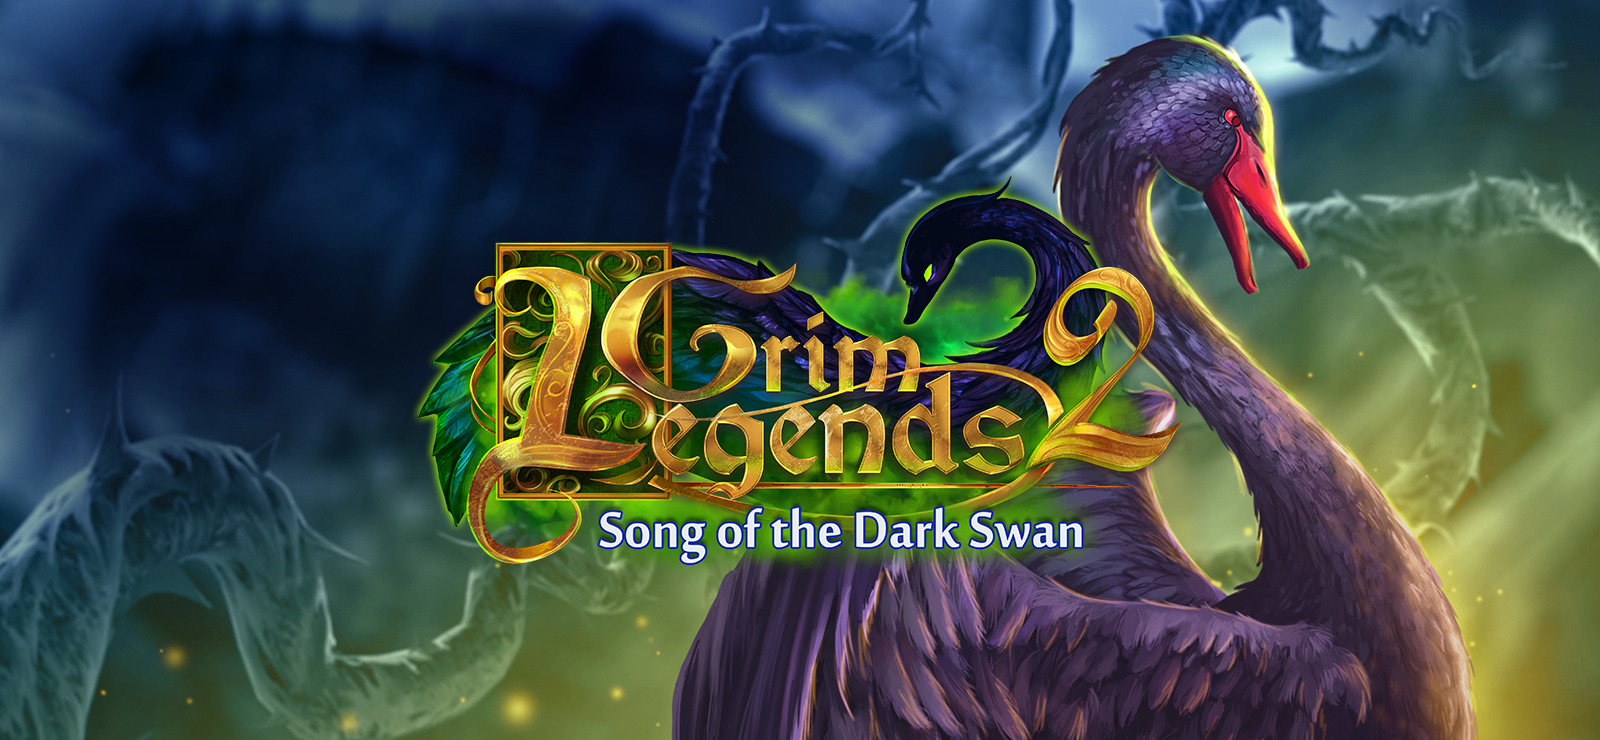 grim legends 2 song of the dark swan healer sigil